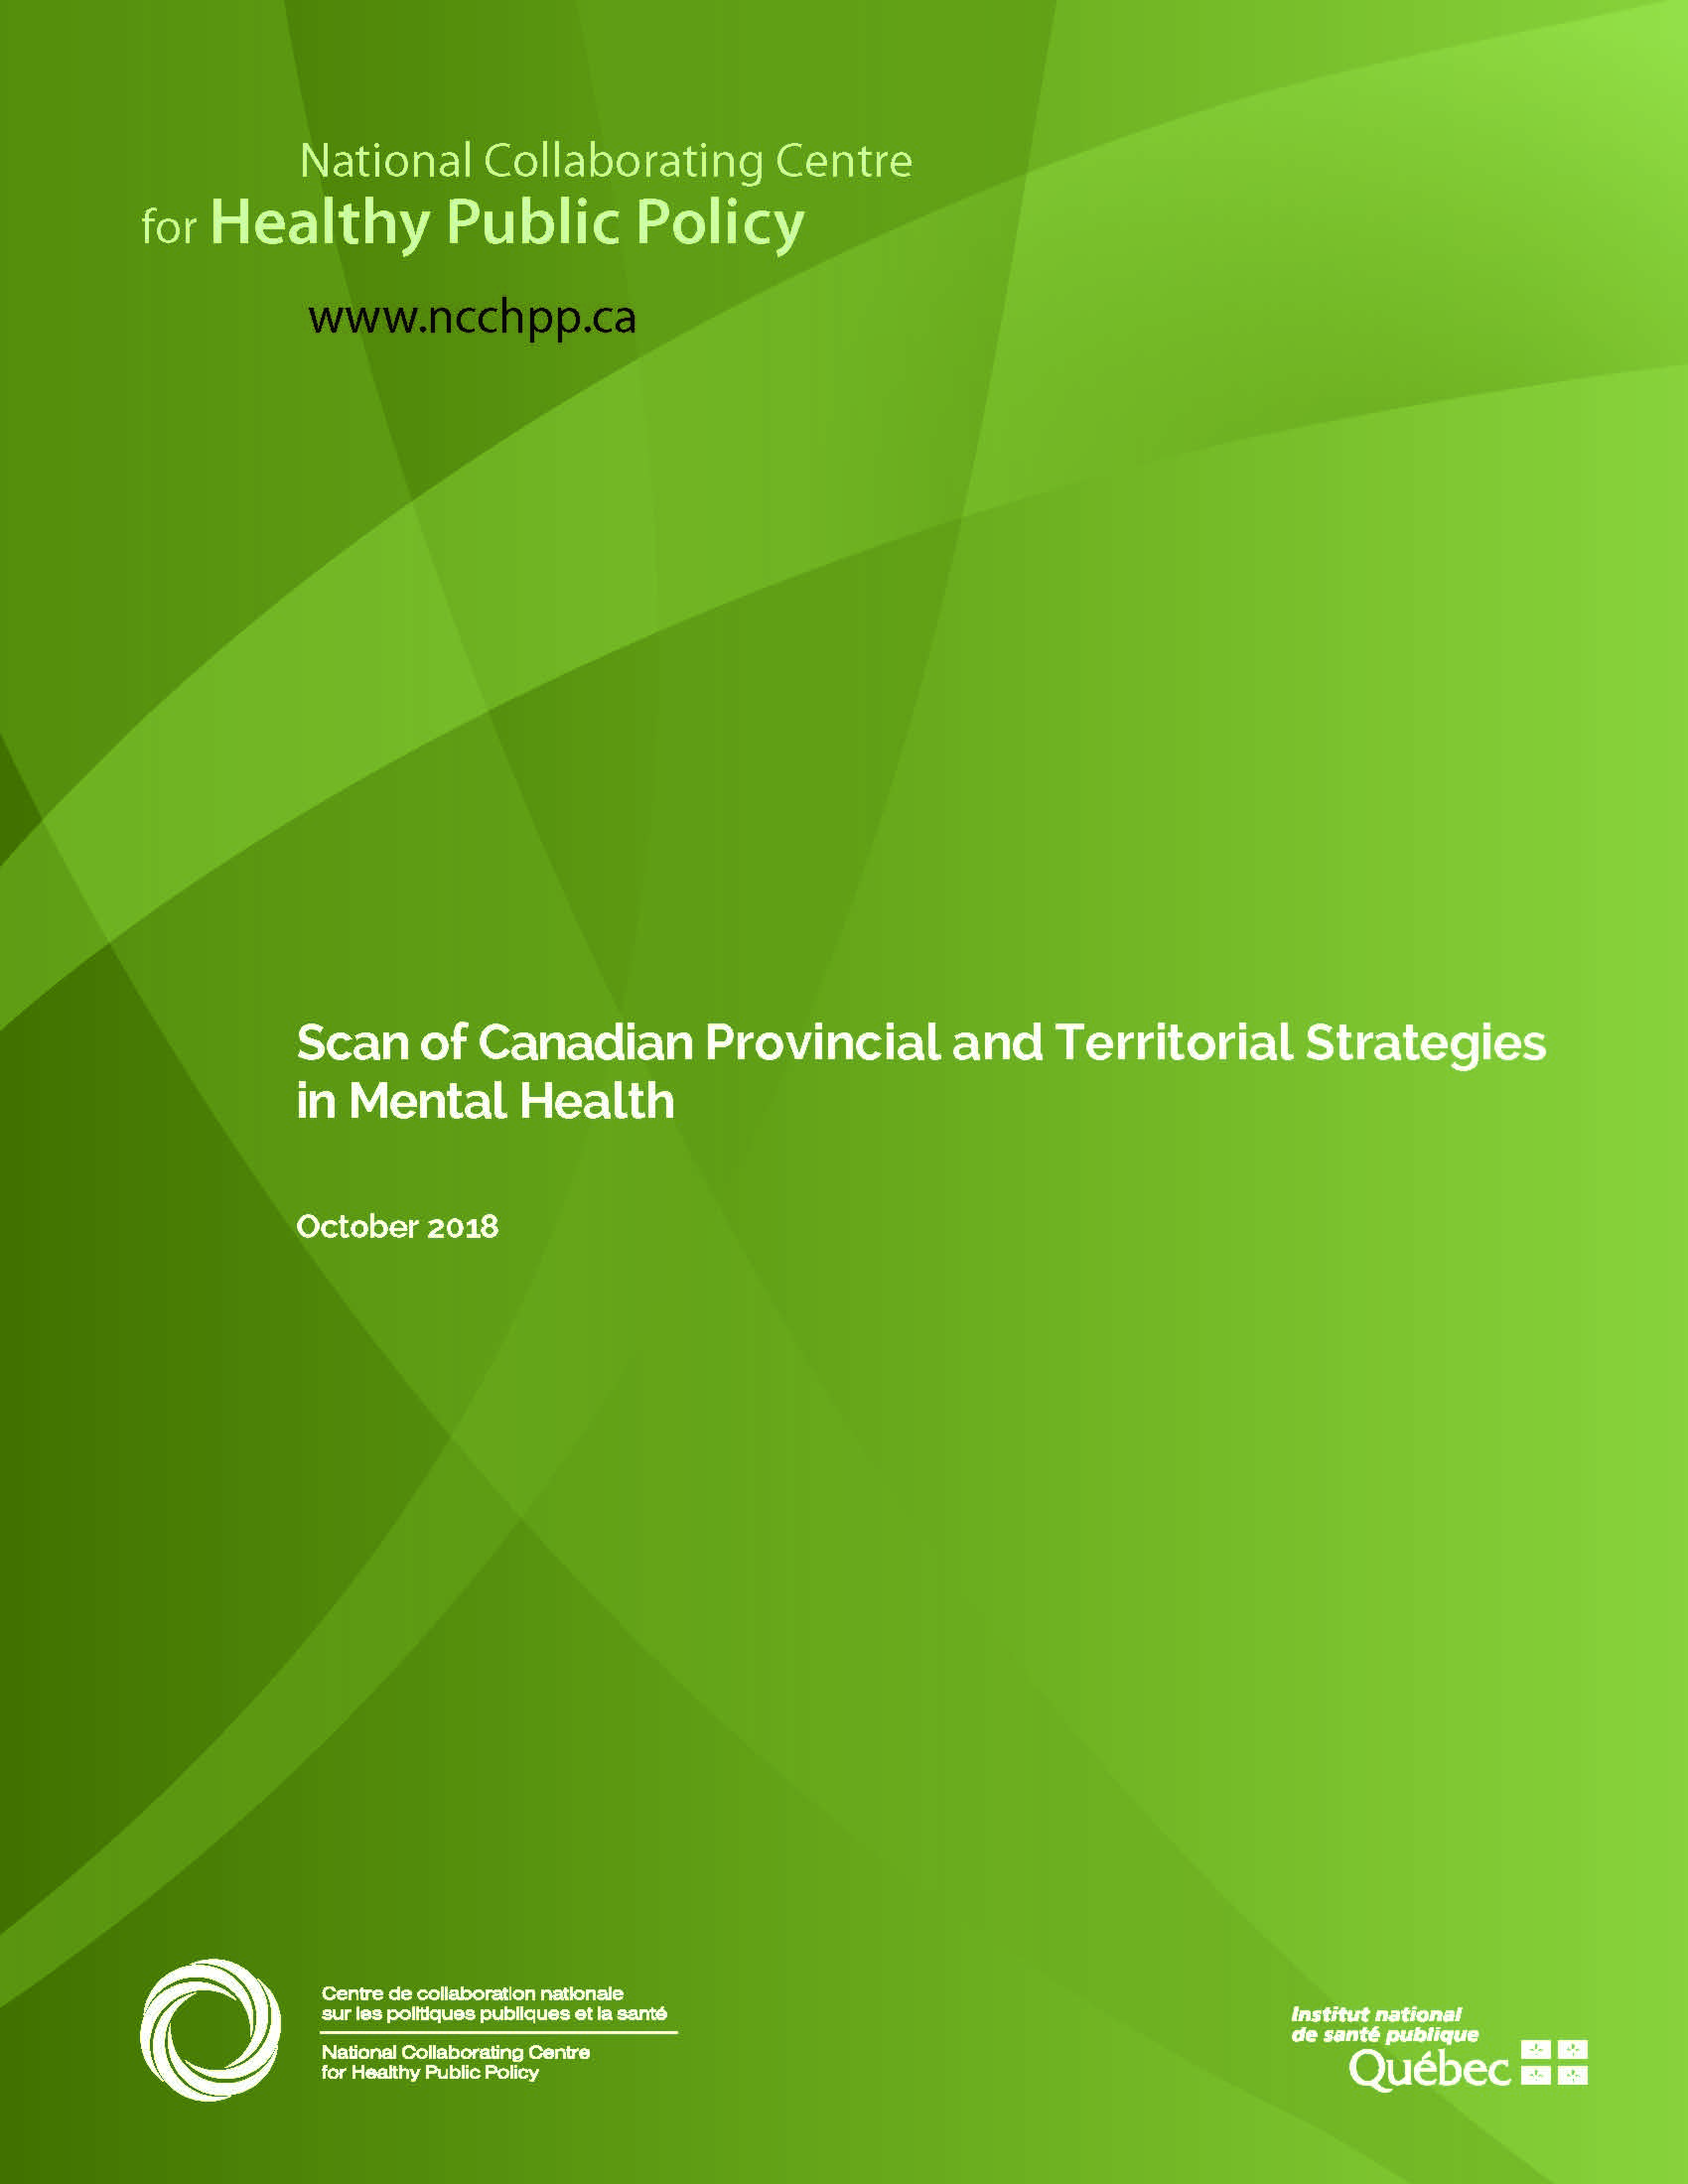 Scan of Mental Health Strategies across Canada